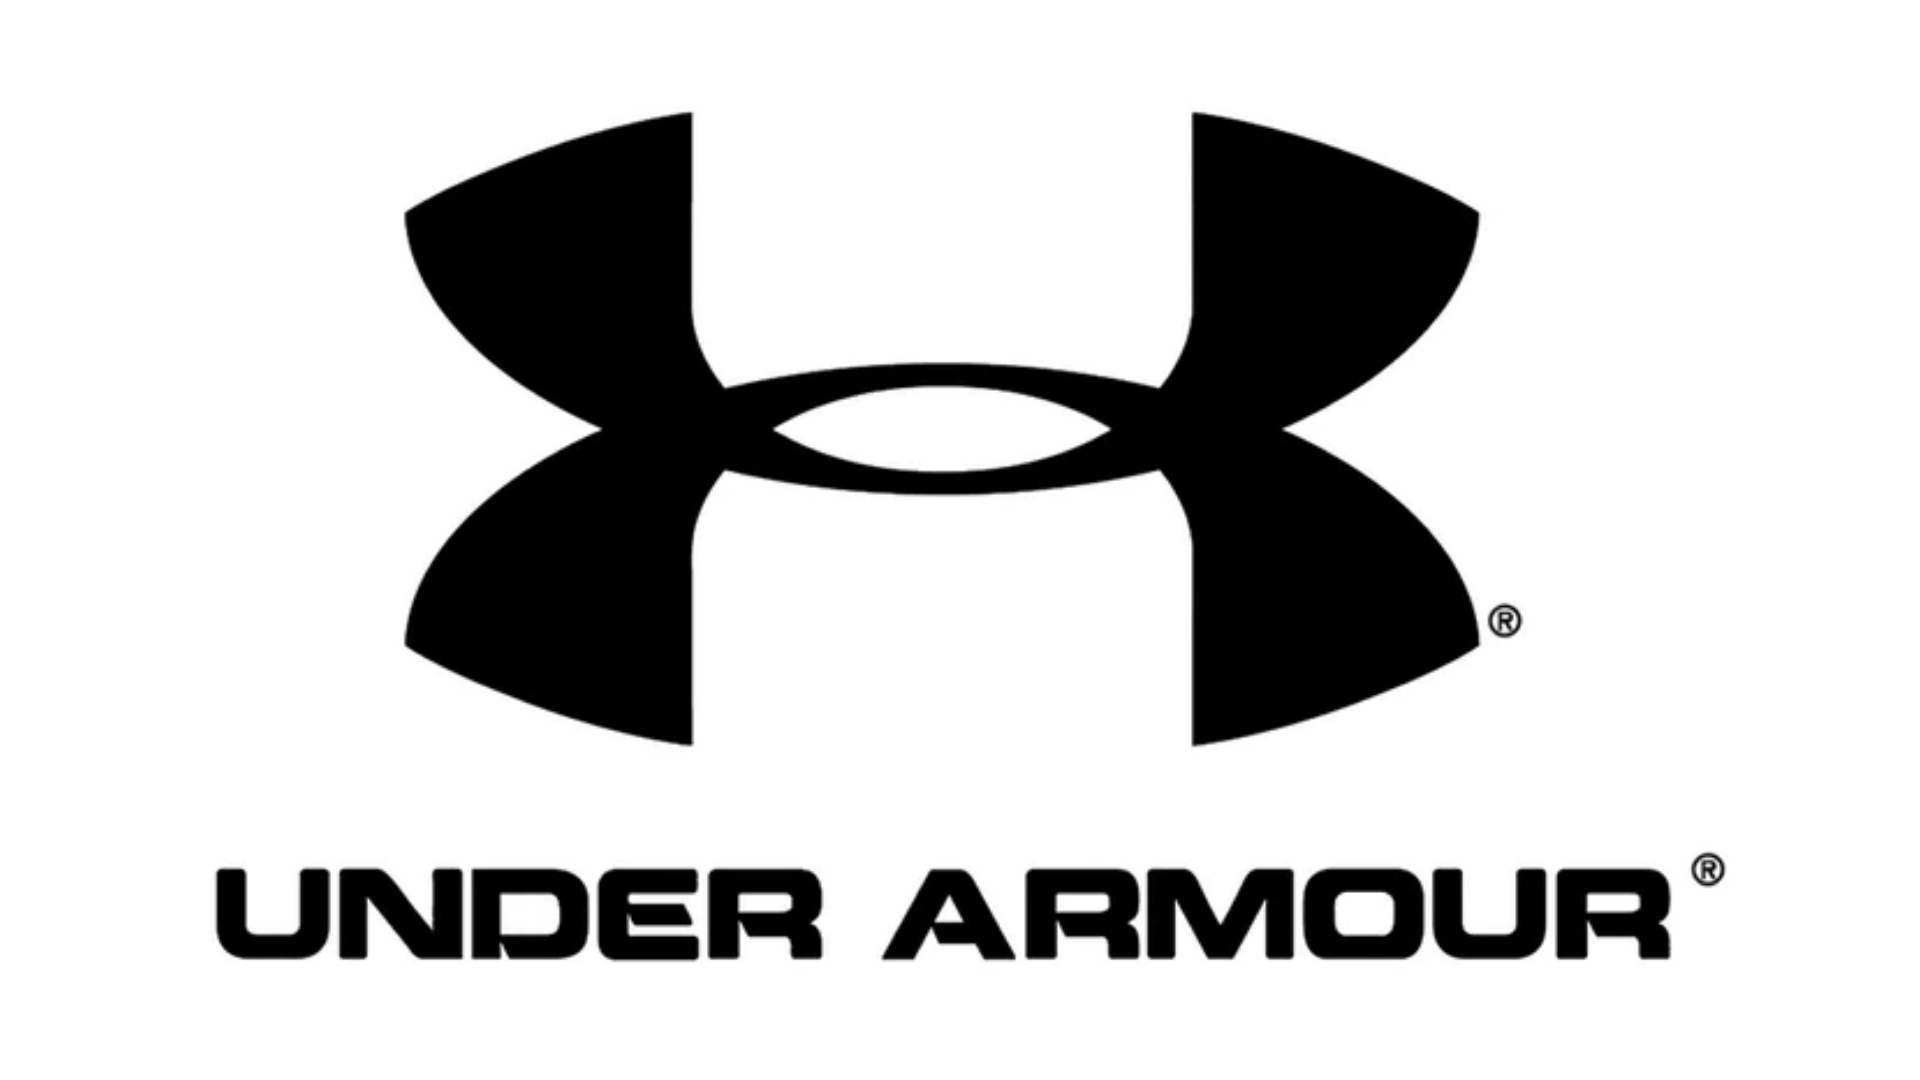 Under armour brand logo